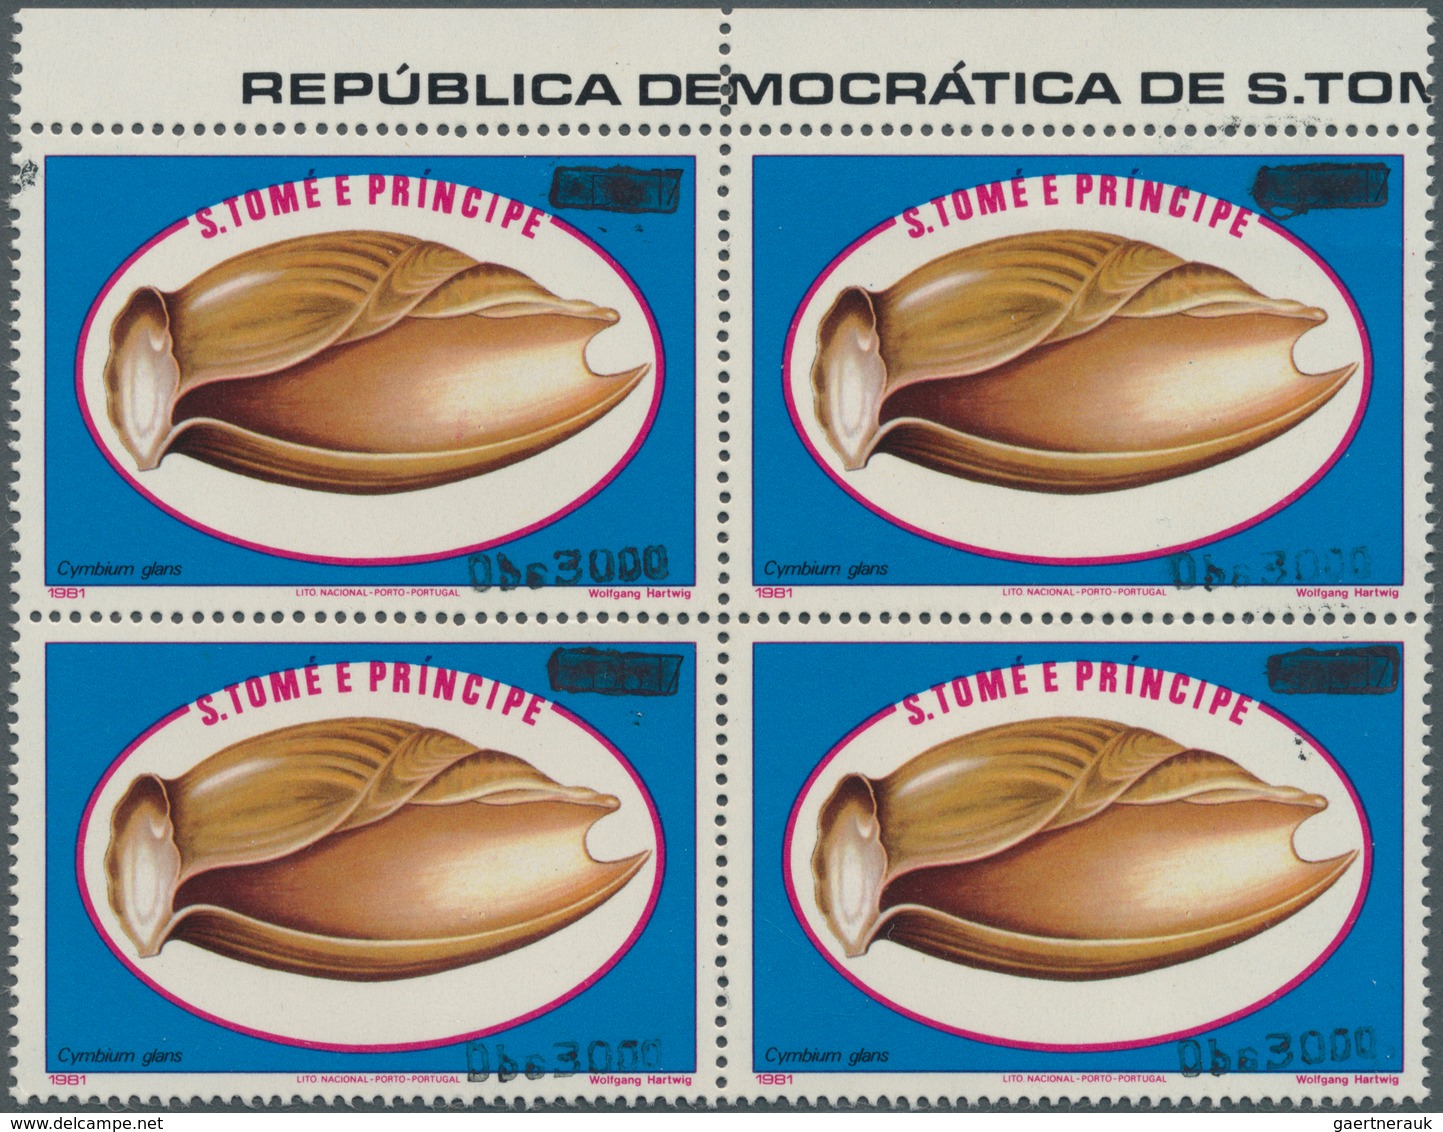 St. Thomas Und Prinzeninsel - Sao Thome E Principe: 1998, Animals Complete Set Of Three Diff. Stamps - São Tomé Und Príncipe